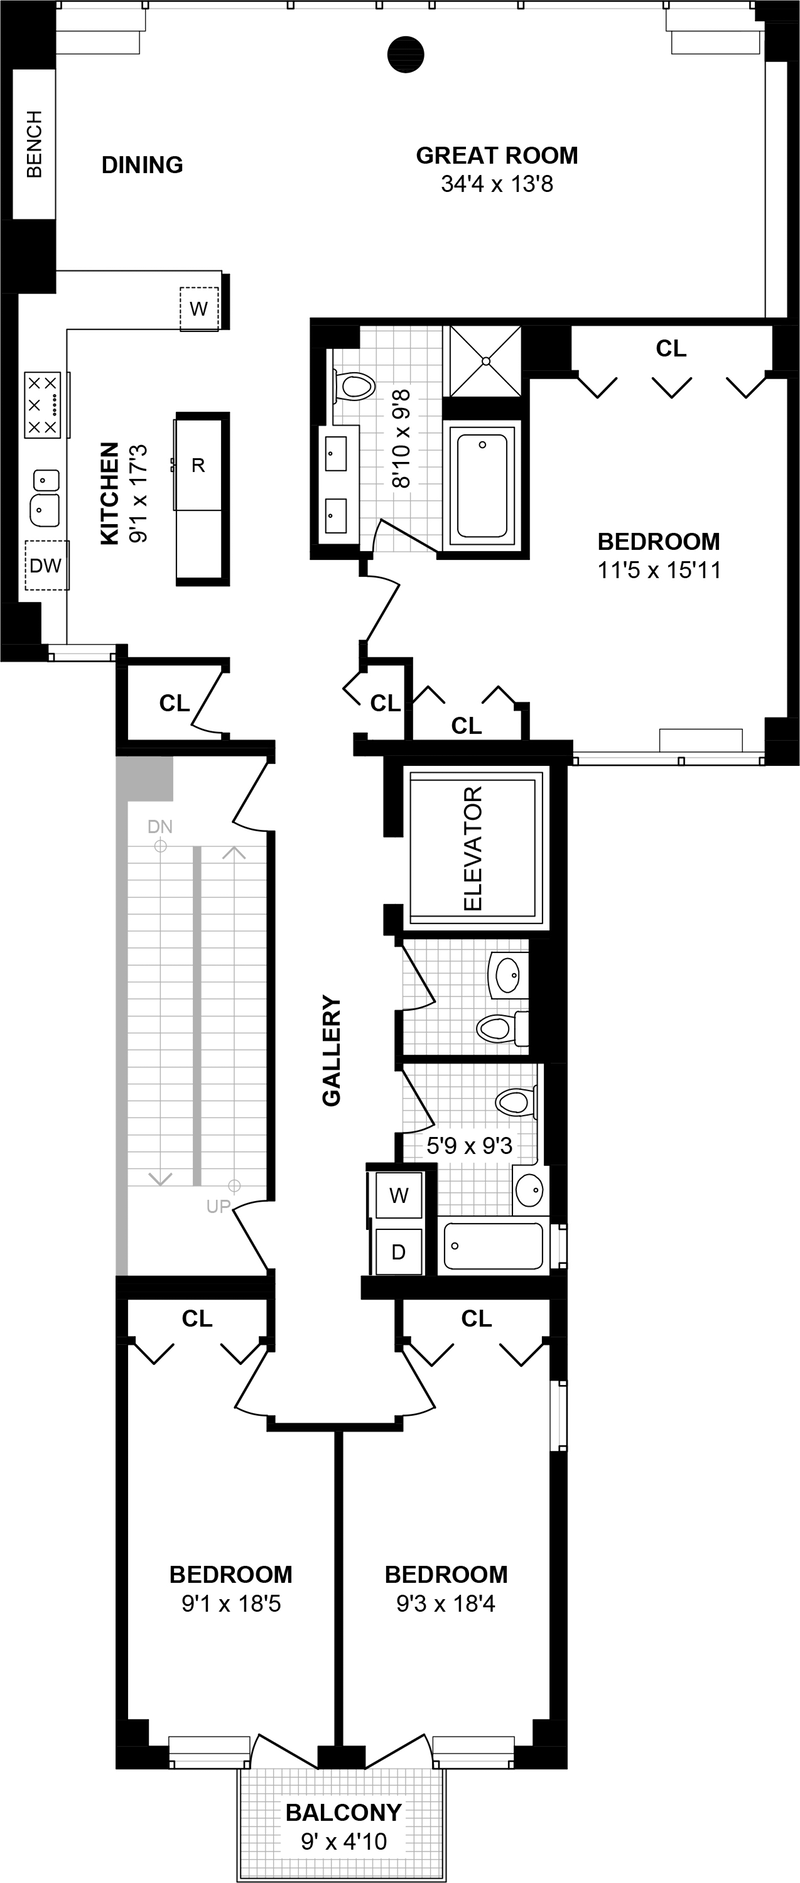 Floorplan for 330 East, 57th Street, 5